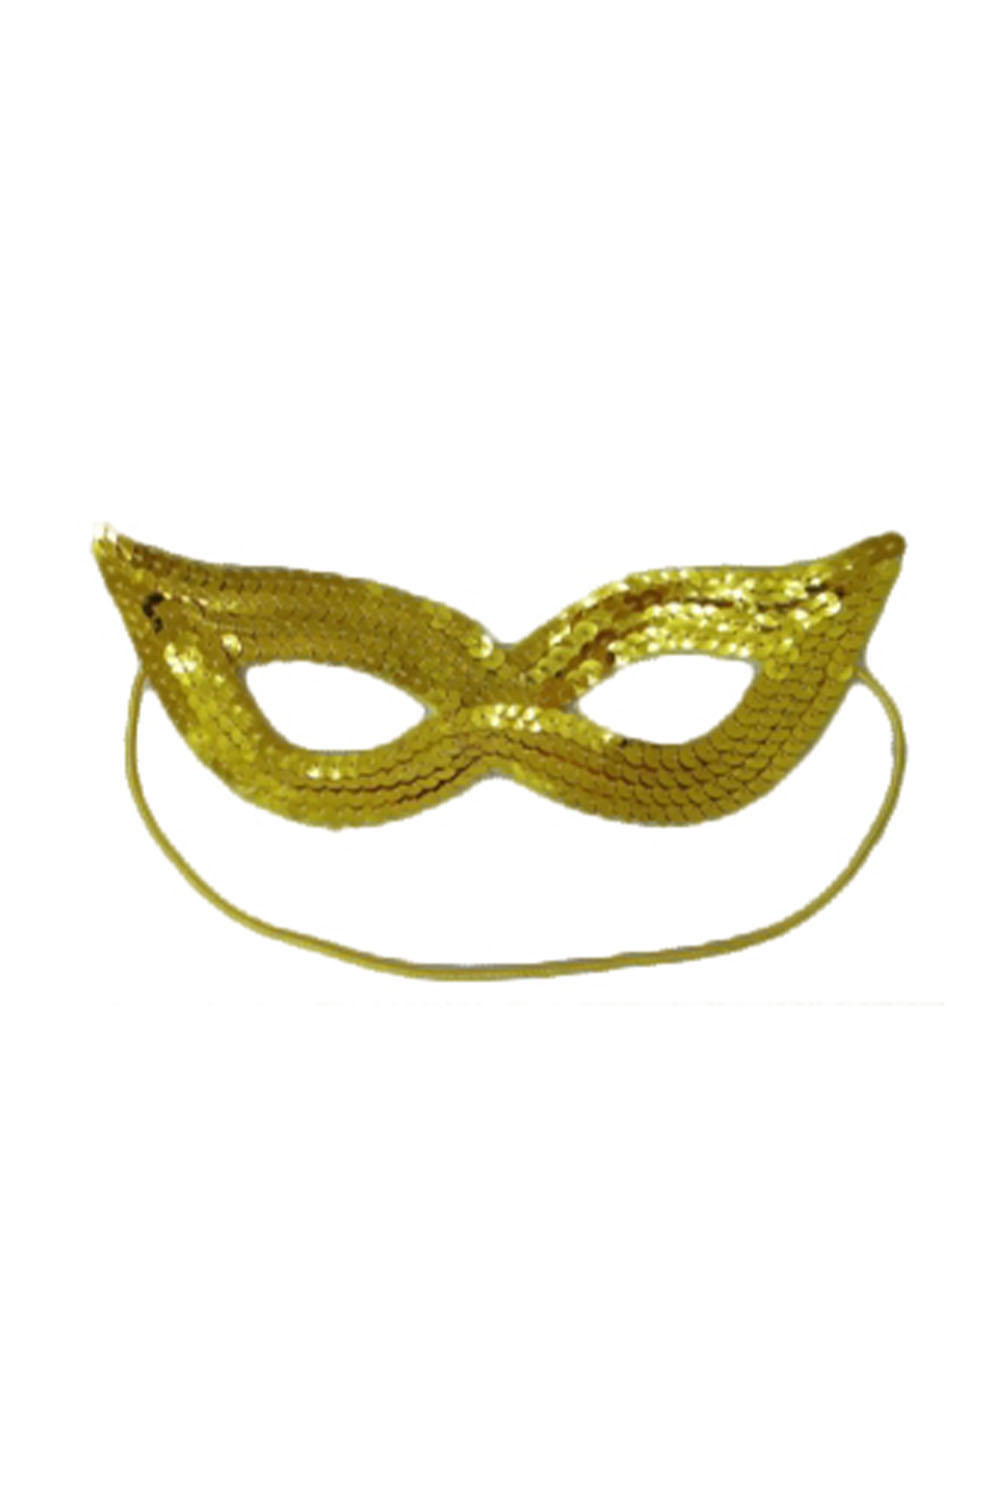 Sequin Gold Face Masks (pack of 12)